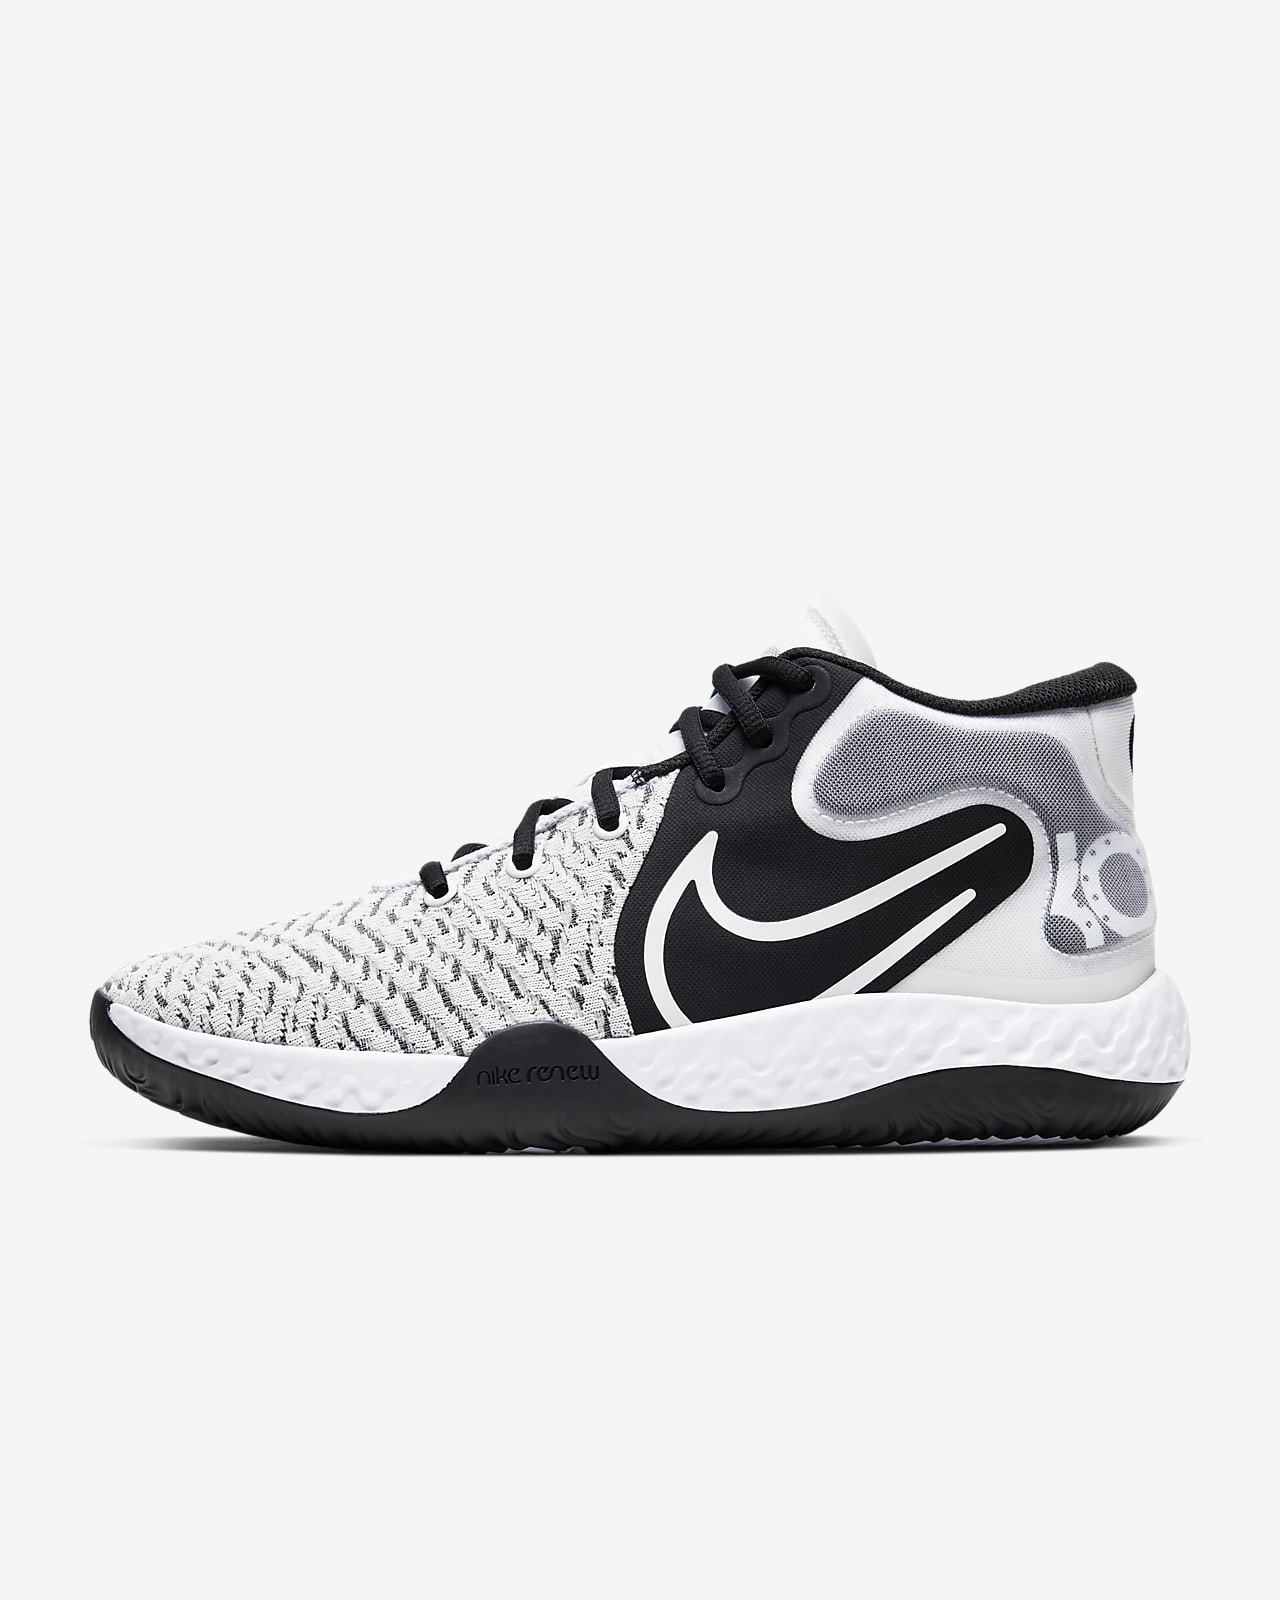 KD Trey 5 VIII EP Basketball Shoe. Nike SG